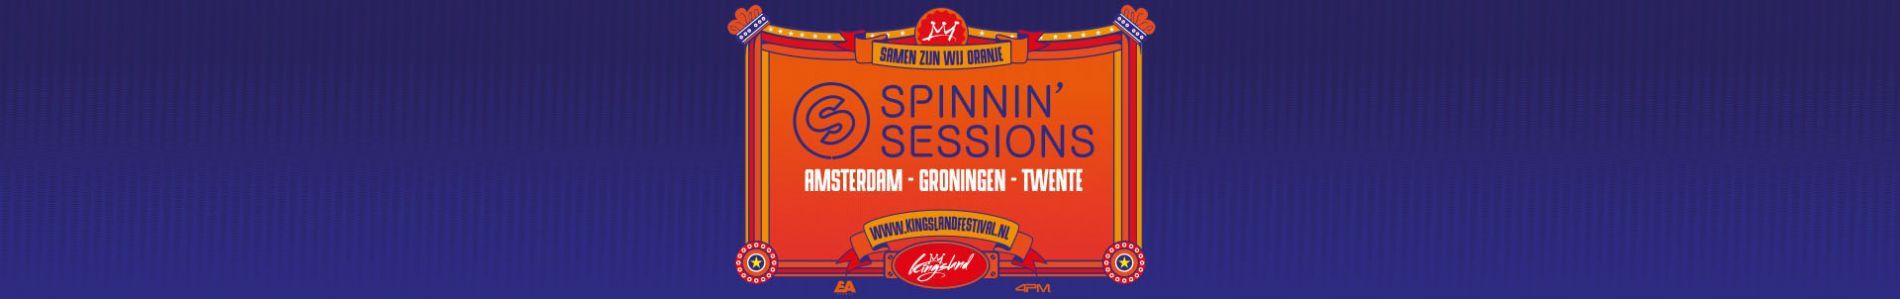 Spinnin' Sessions Spinnin' Sessions | Kingsland 2018